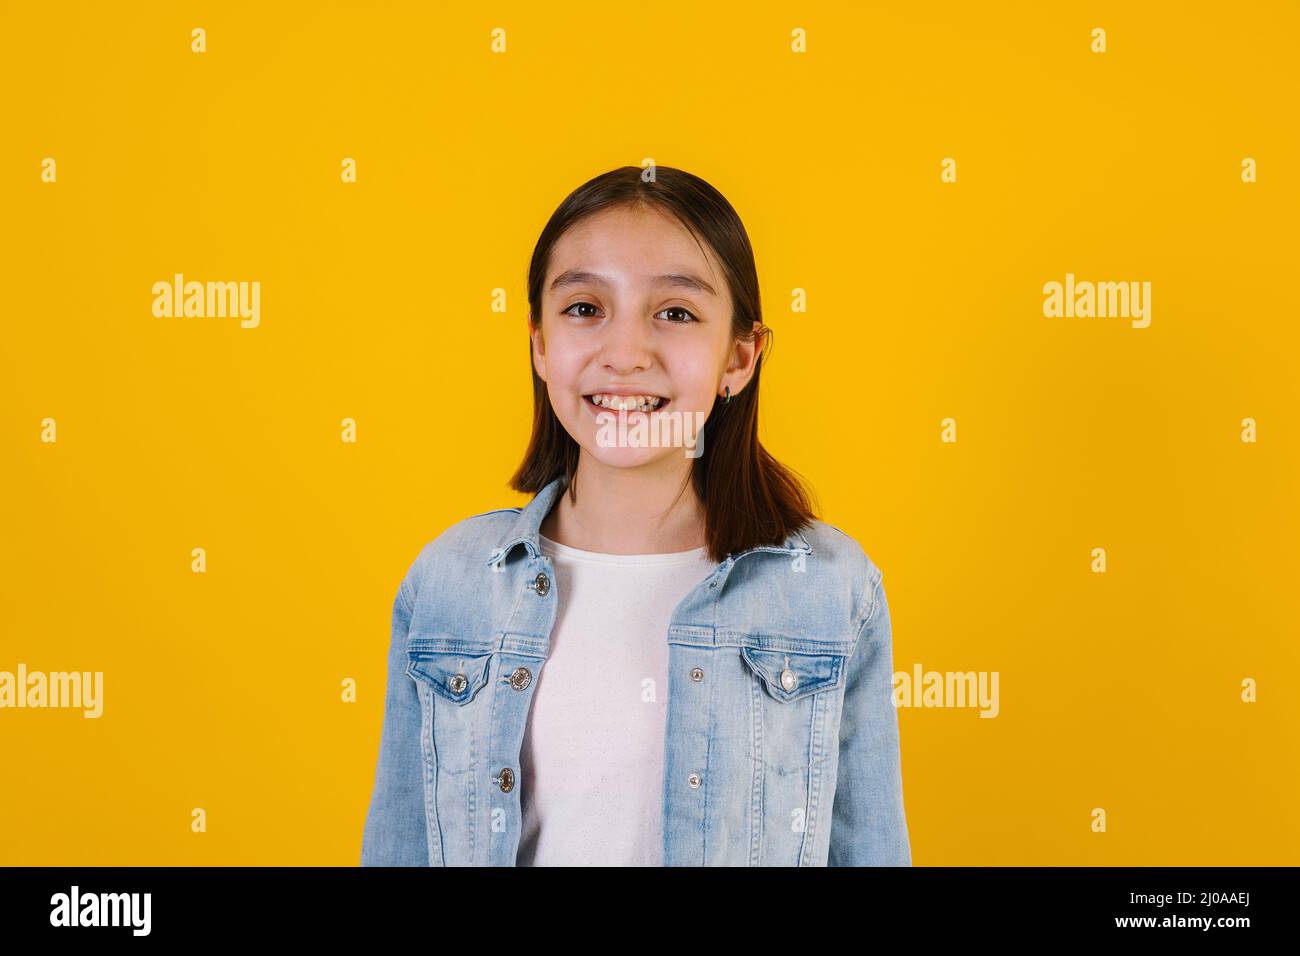 Portrait of hispanic child girl on yellow background in Mexico Latin America Stock Photo